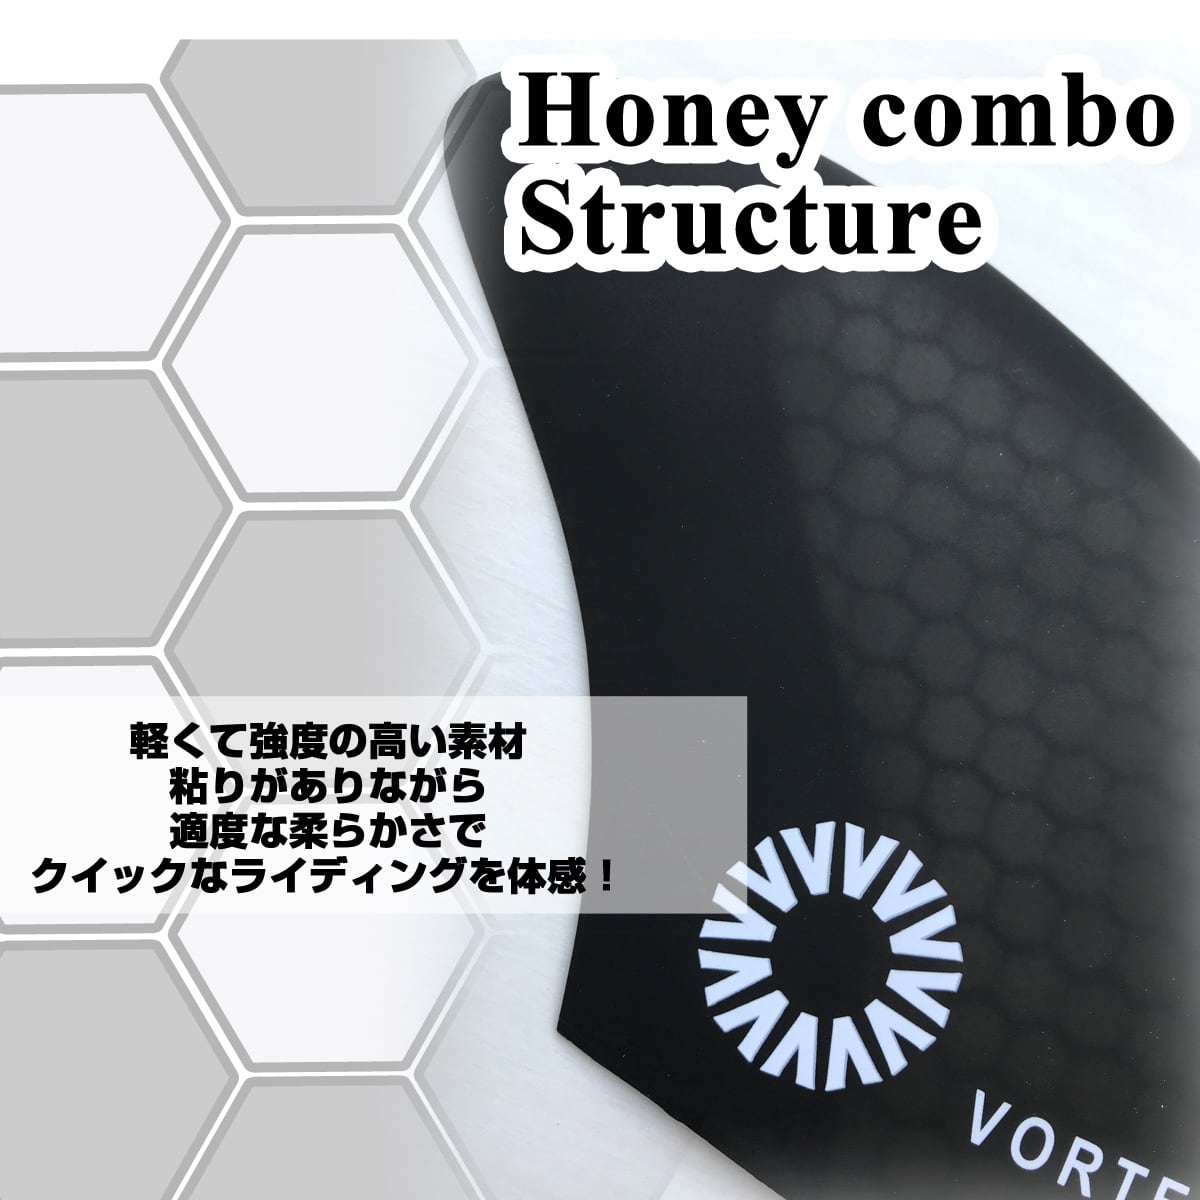 honey-comb8さん②